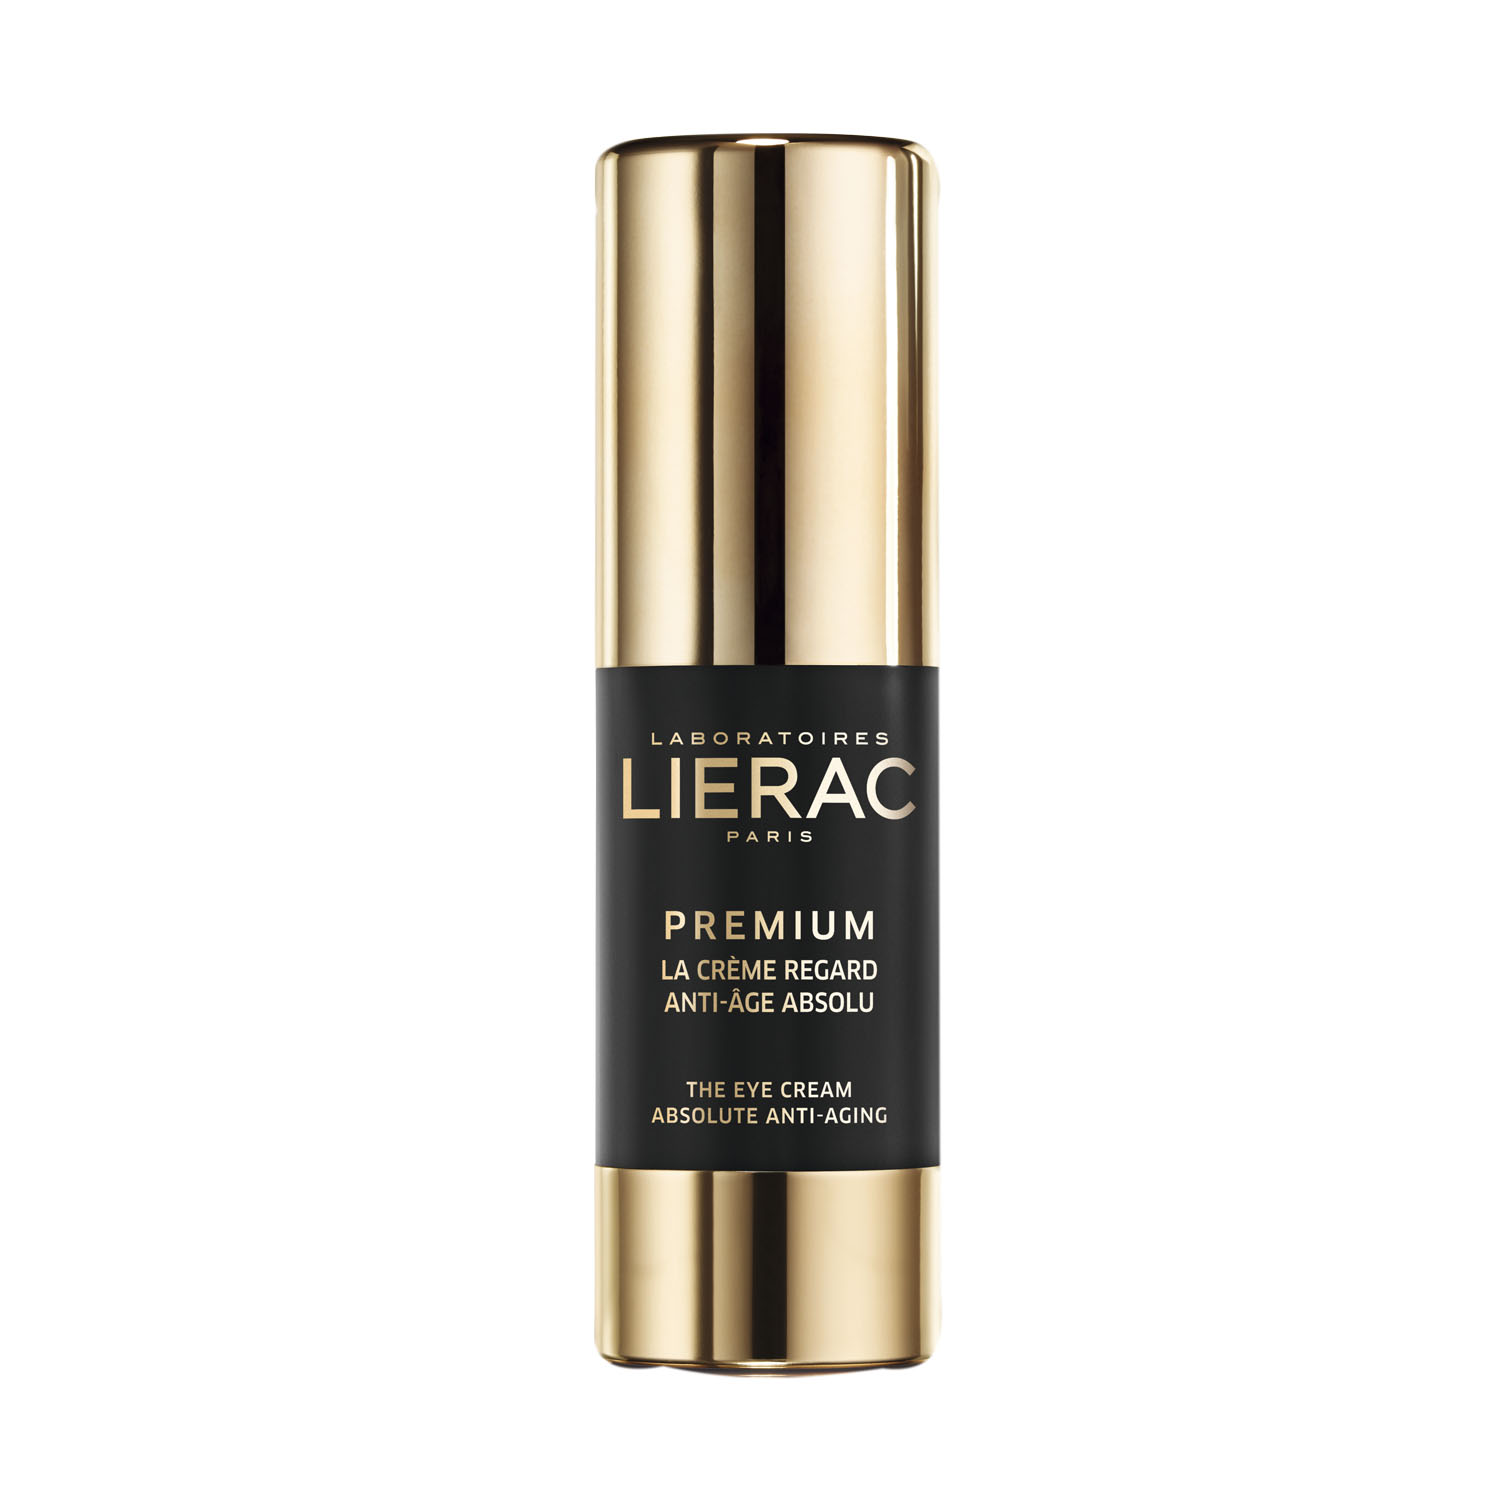 Lierac Premium крем для контура вокруг глаз анти-аж Абсолю 15мл крем для лица lierac премиум крем бархатистый анти аж абсолю